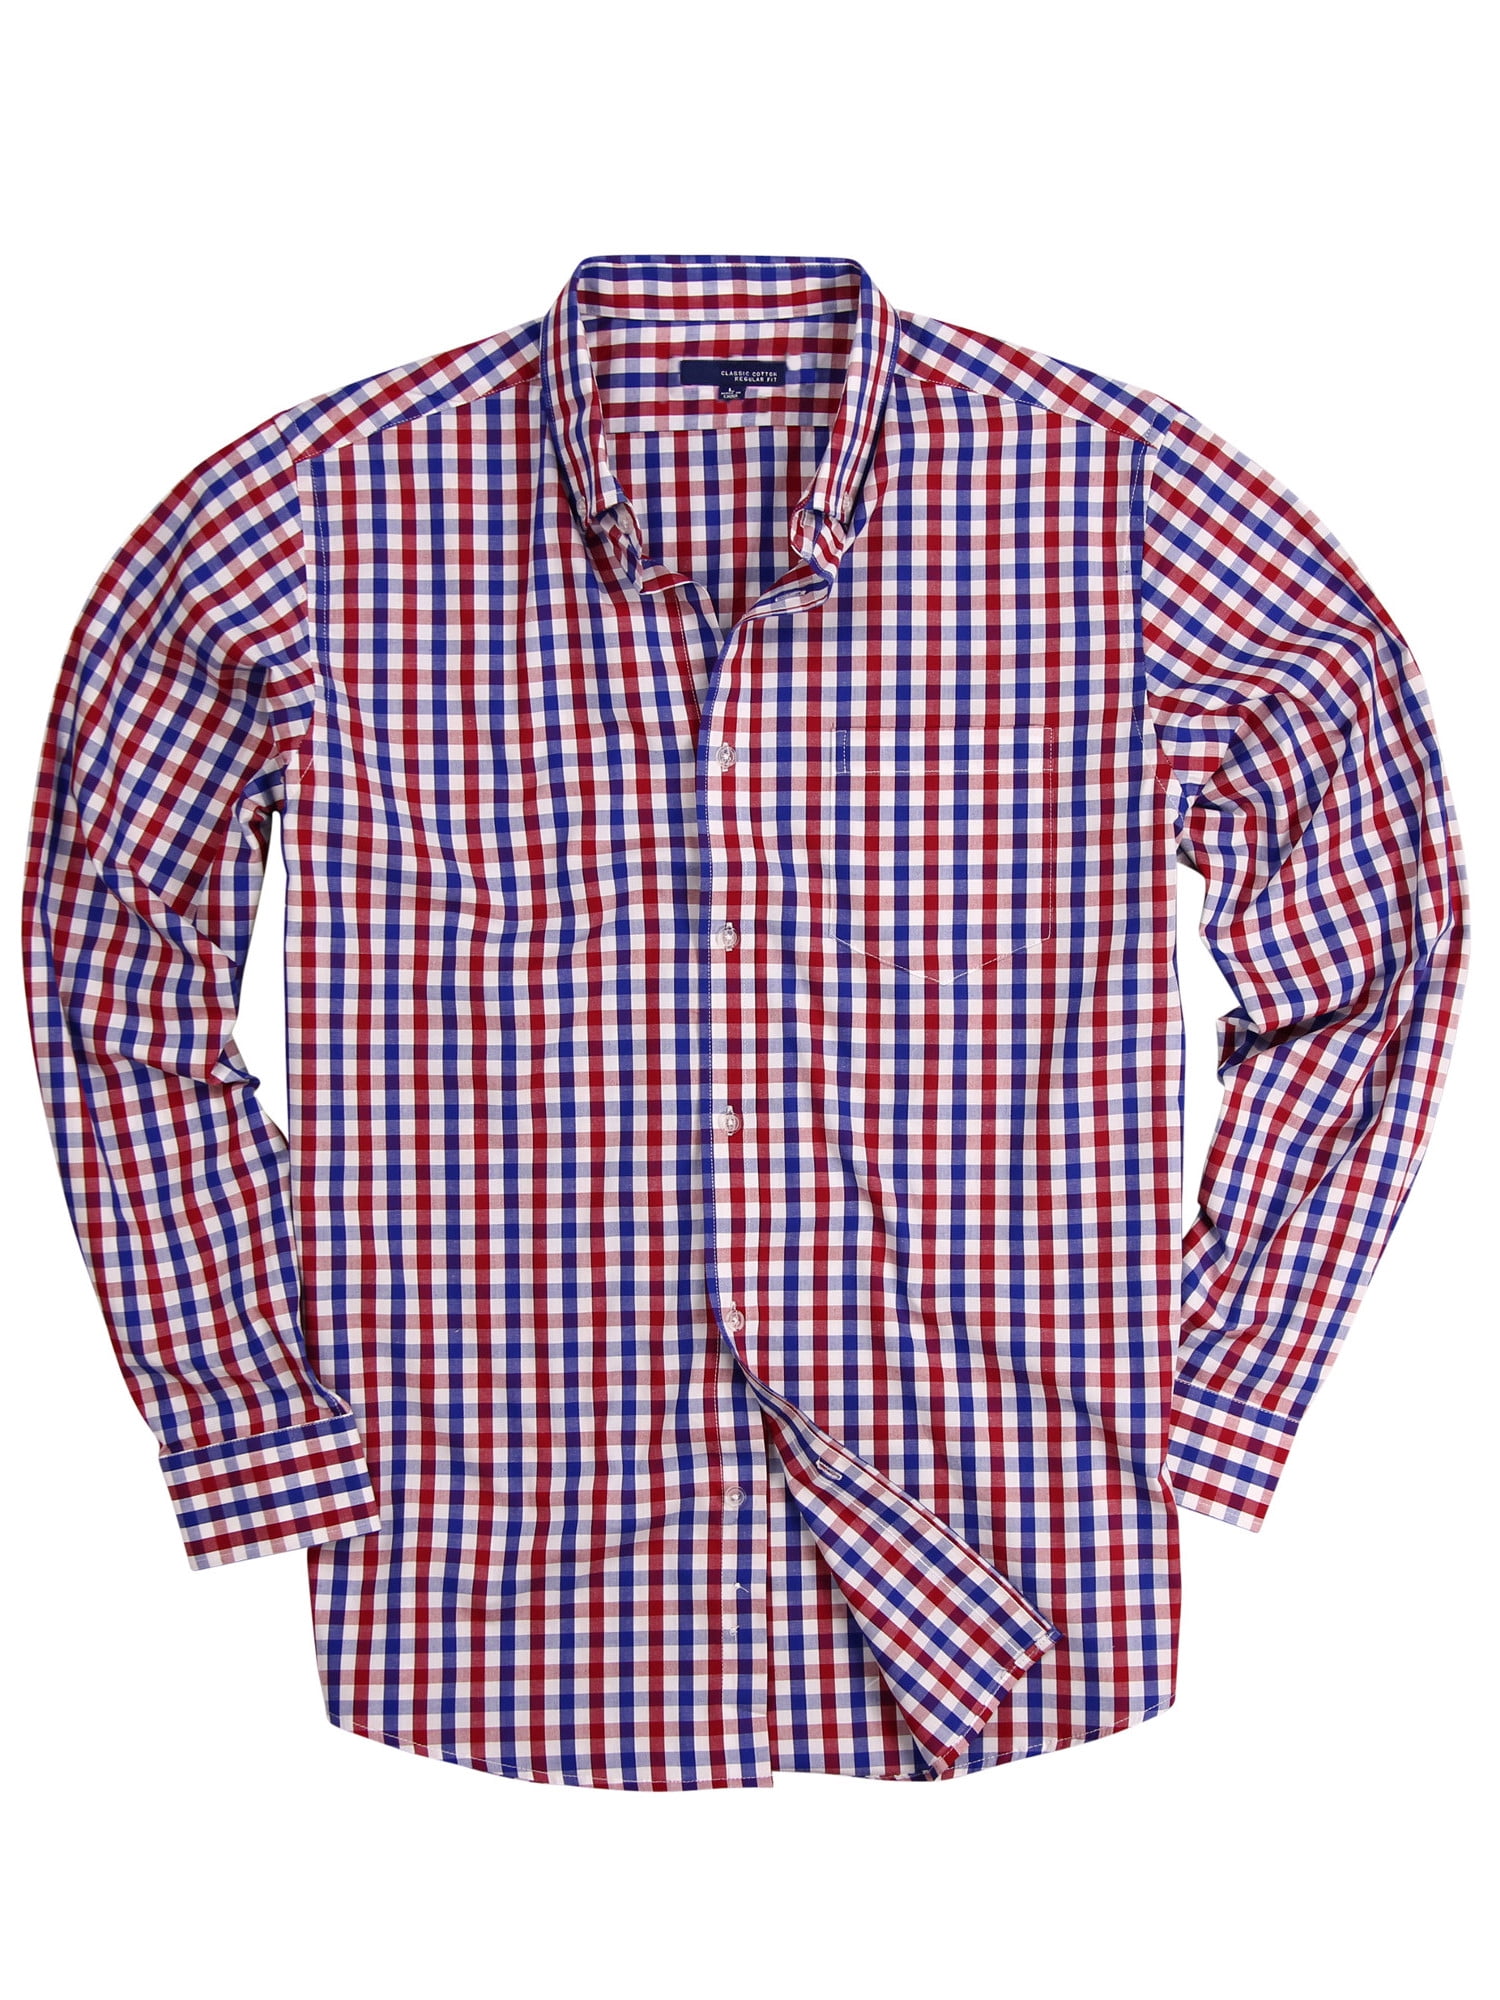 KLJR Men Shirt Plaid Regular Fit Color Block Plus Size Long Sleeve Casual Checkered Shirt